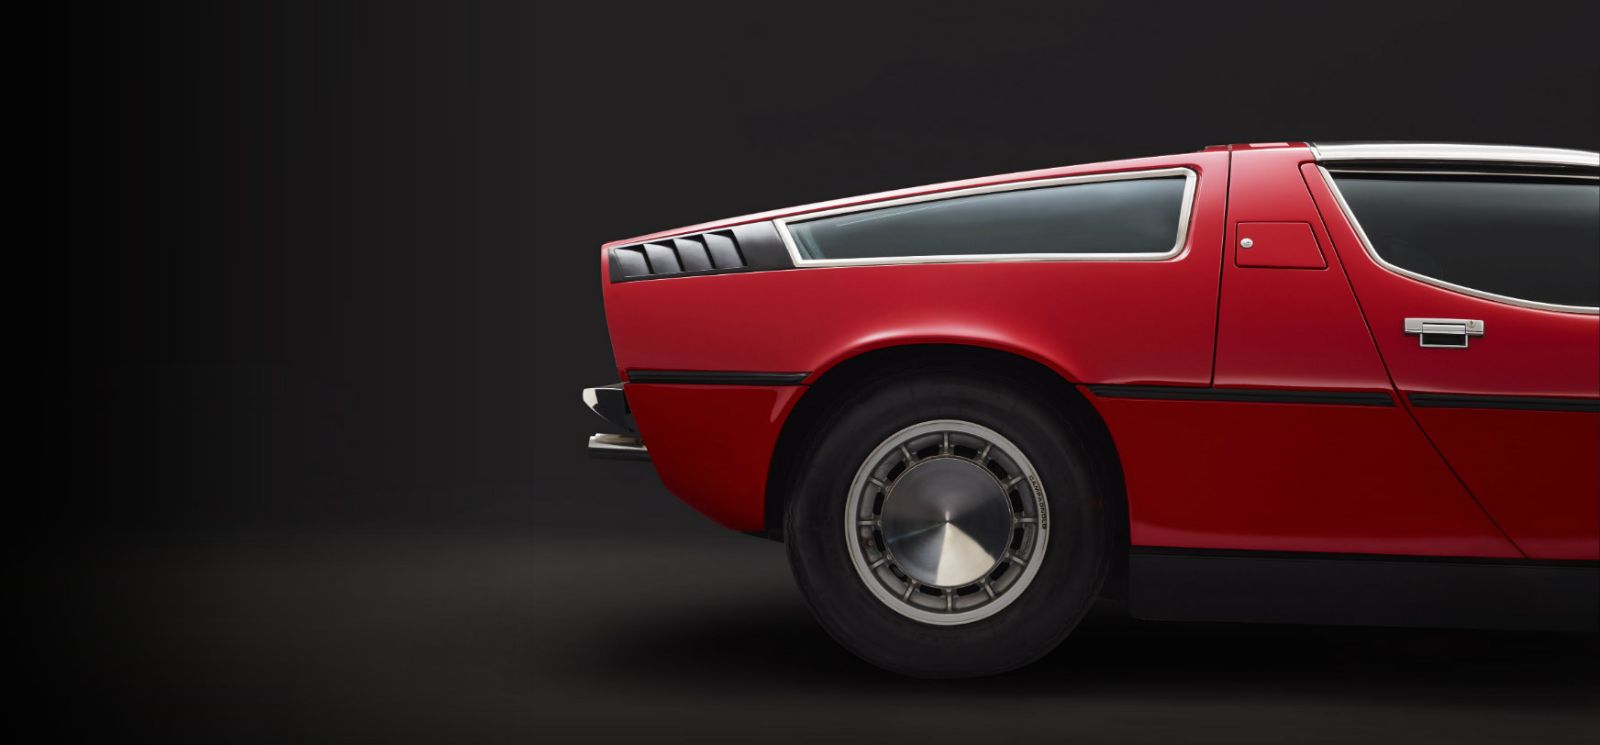 Maserati Classic Cars